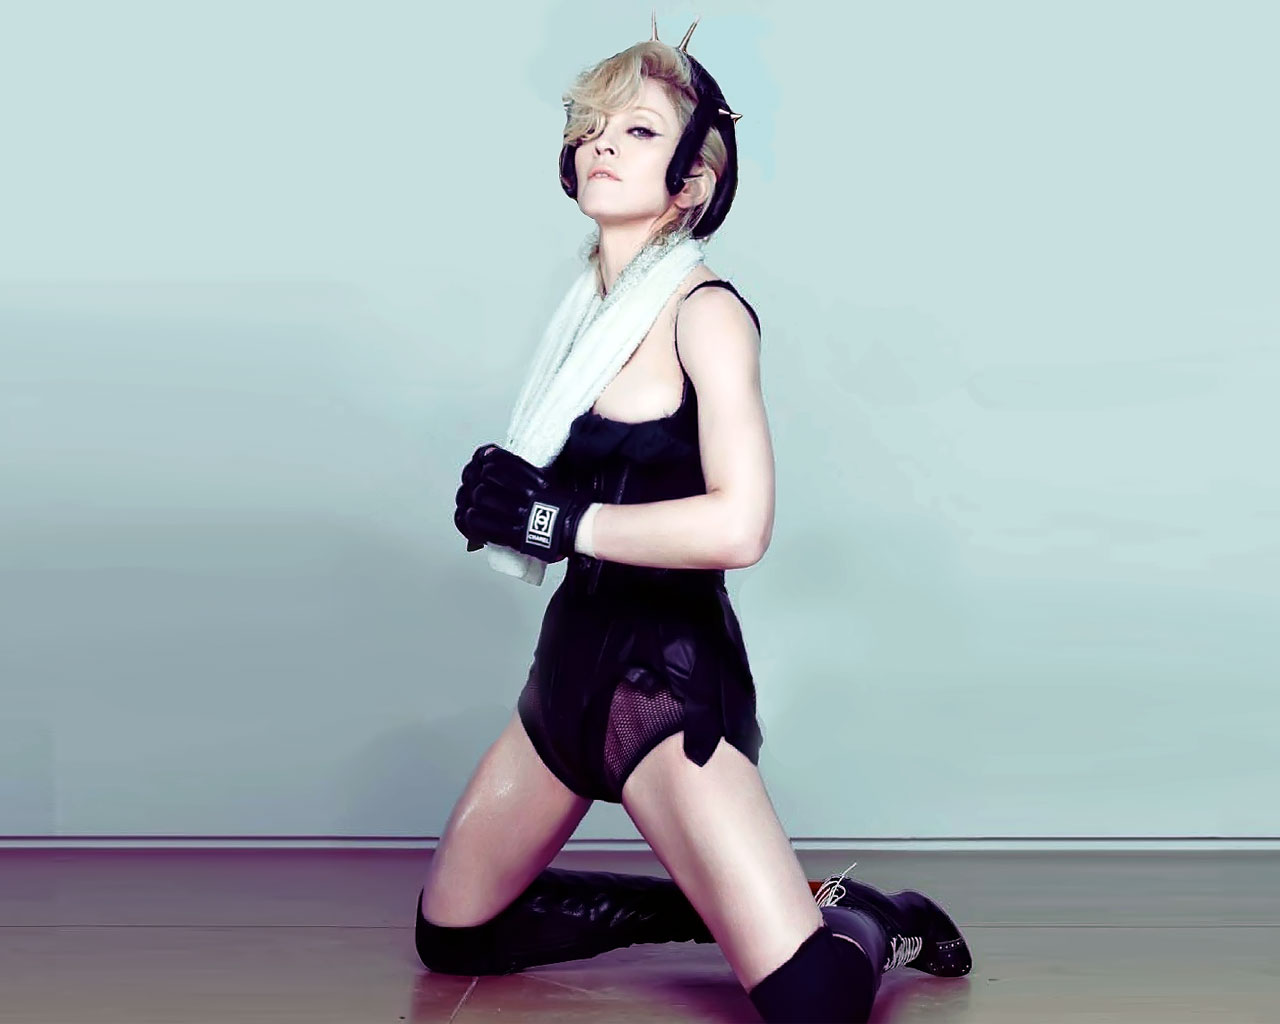 Мадонна 2008 год. Madonna 2008 hard Candy. Beat goes on Мадонна. Клинок "Мадонна. Madonna back that up